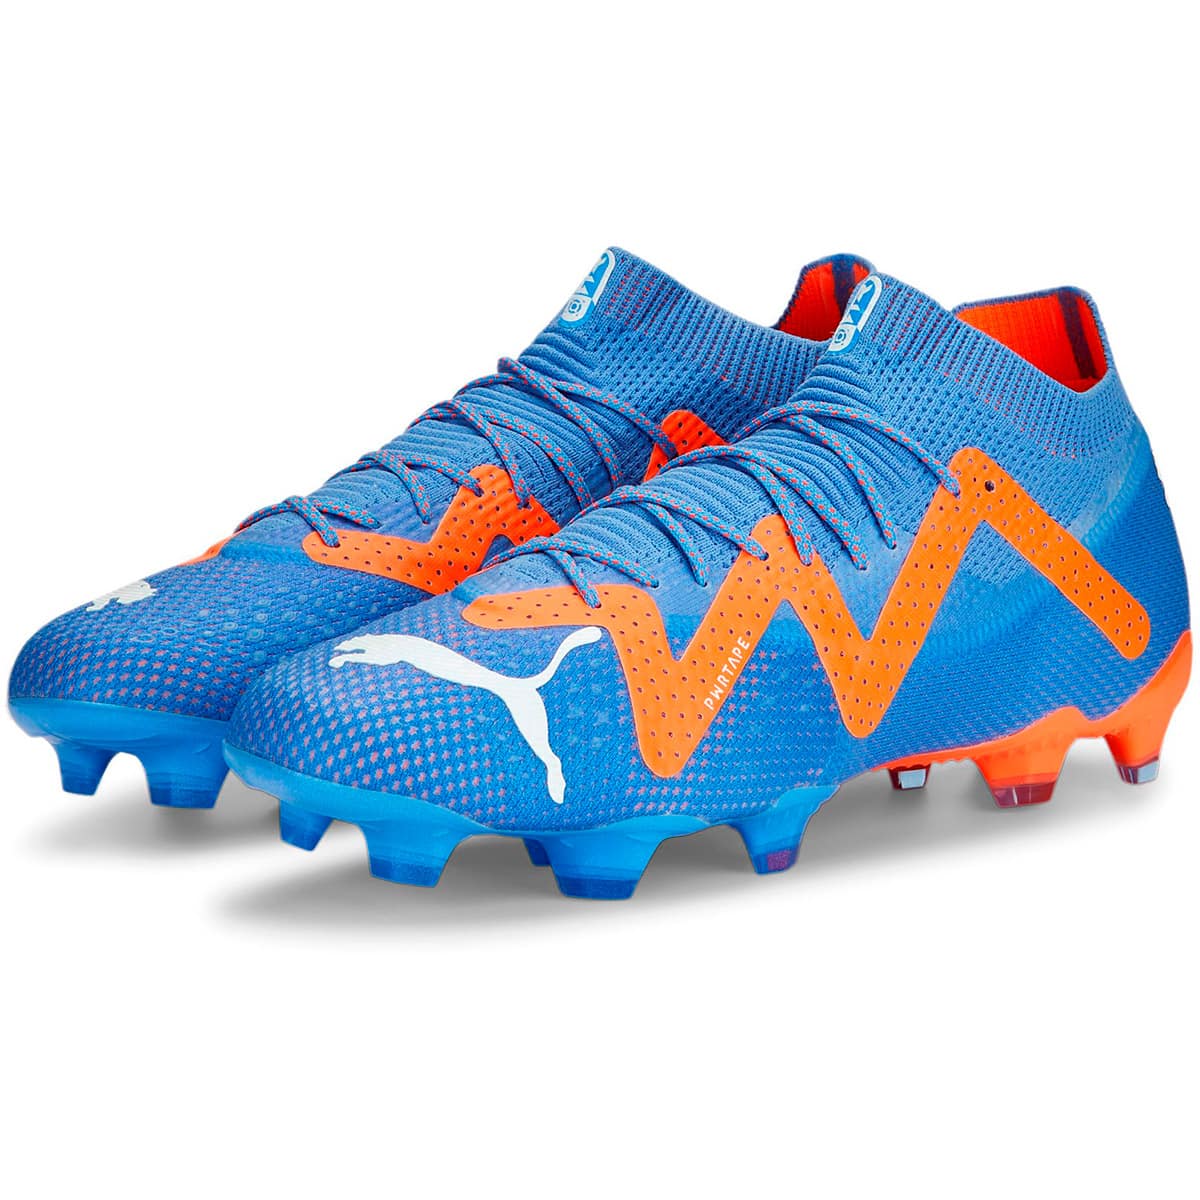 Puma Fußballschuh FG/AG Future Ultimate blau-orange-weiß